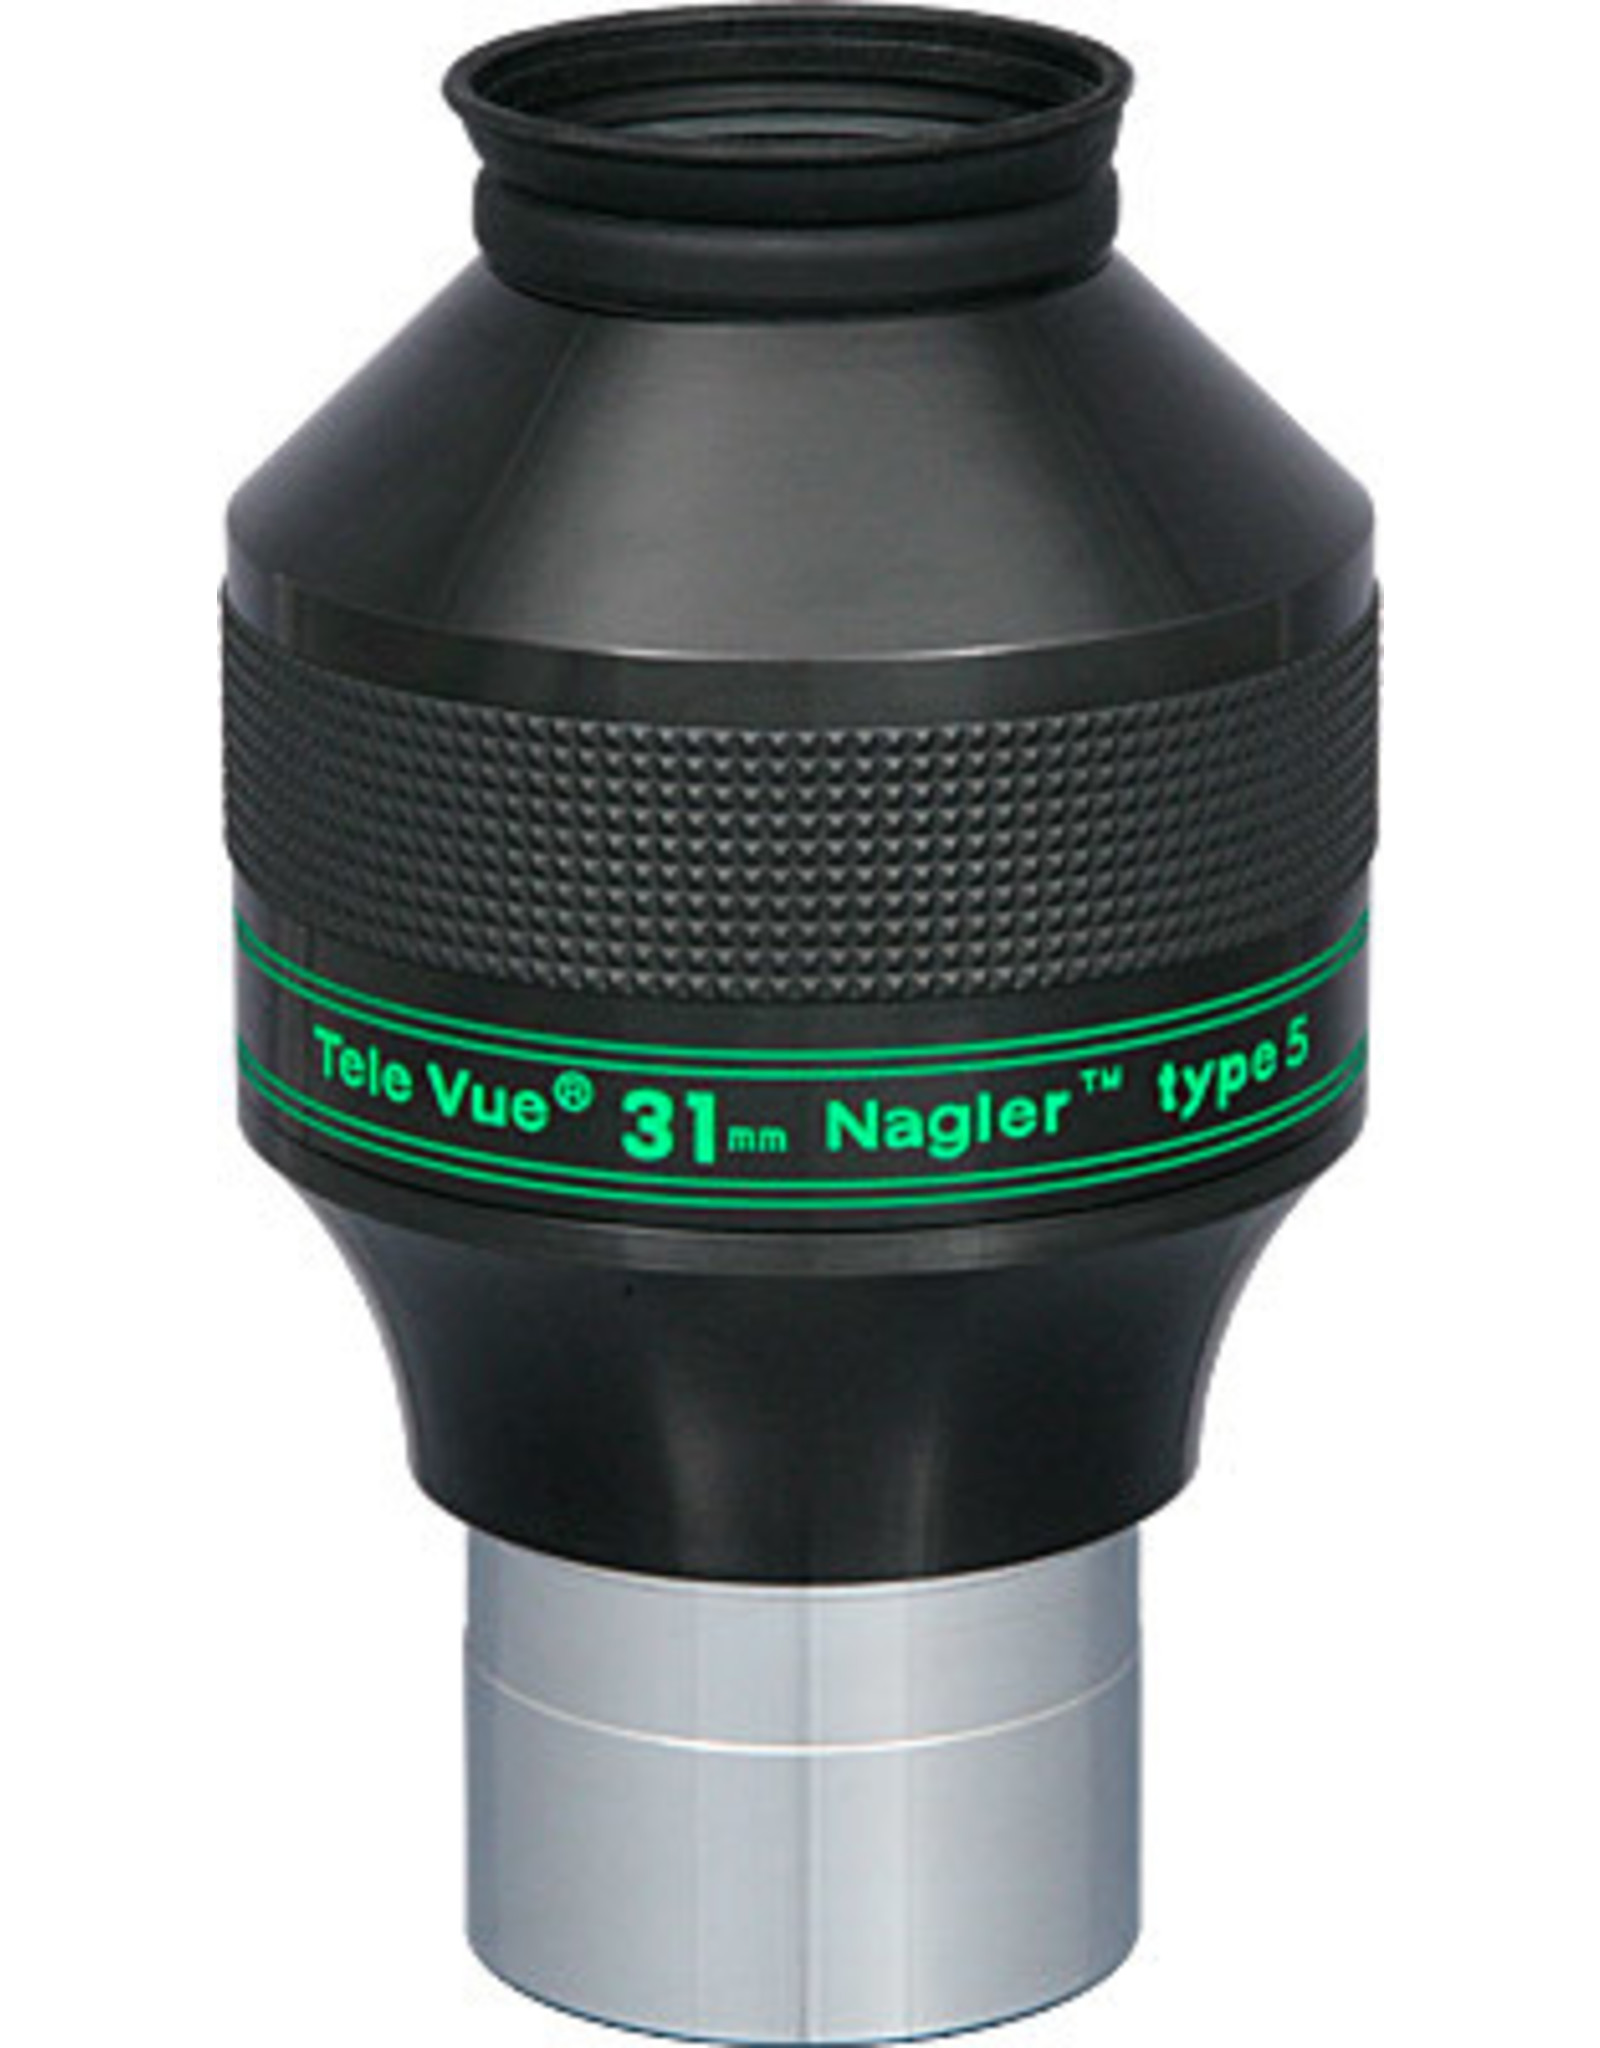 Tele Vue Tele Vue 31mm Nagler Type 5 Eyepiece - 2